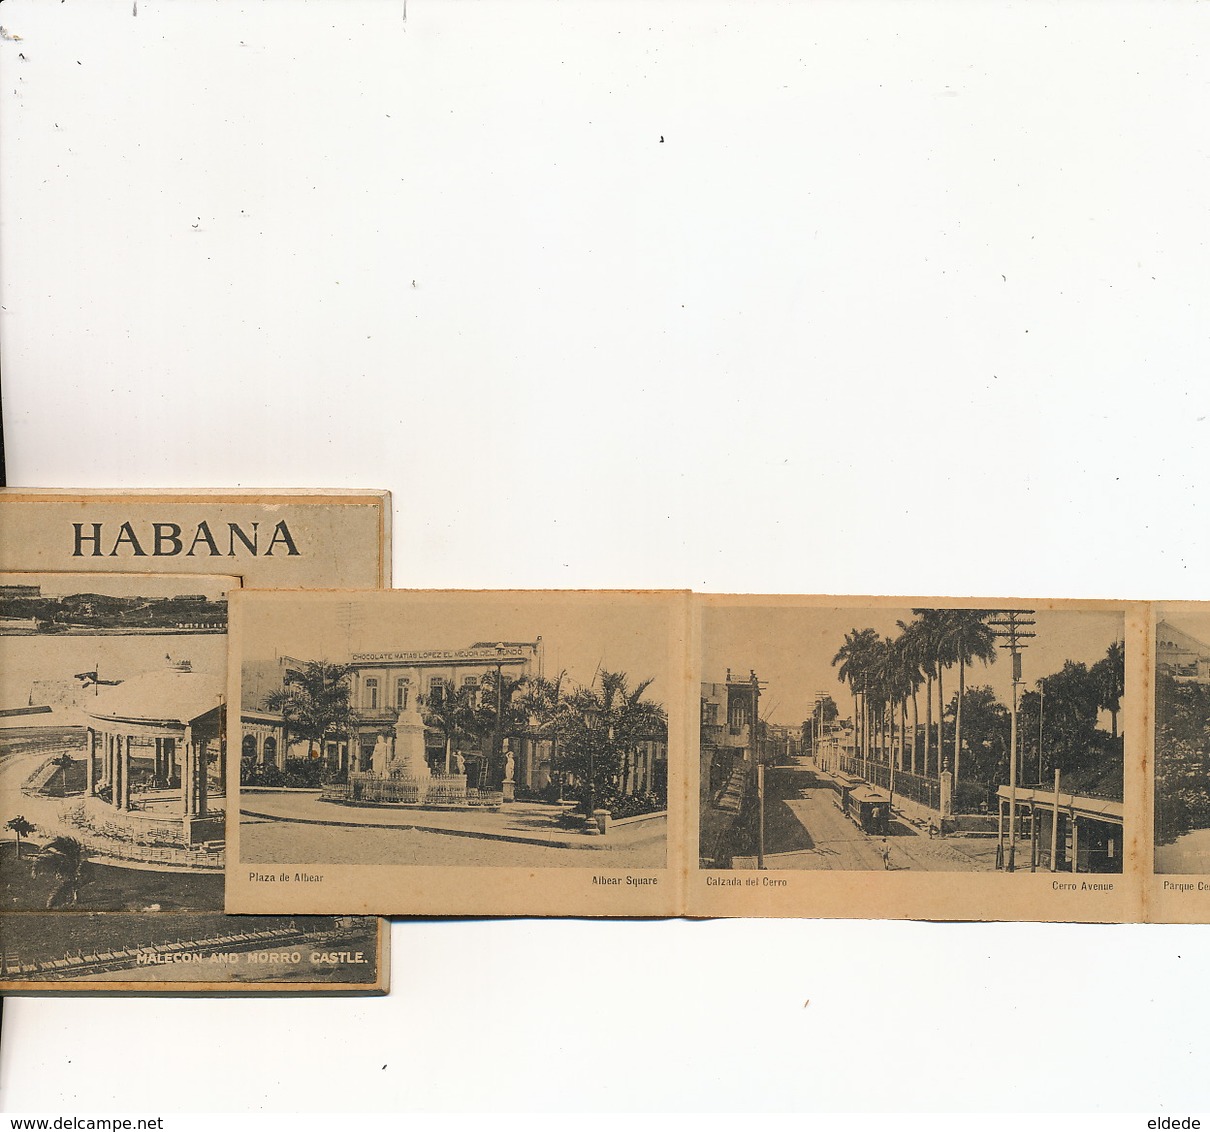 Mechanichal Card Havana Very thick with 12 views Tram, Cemeterio Colon , Prado , Parque central etc